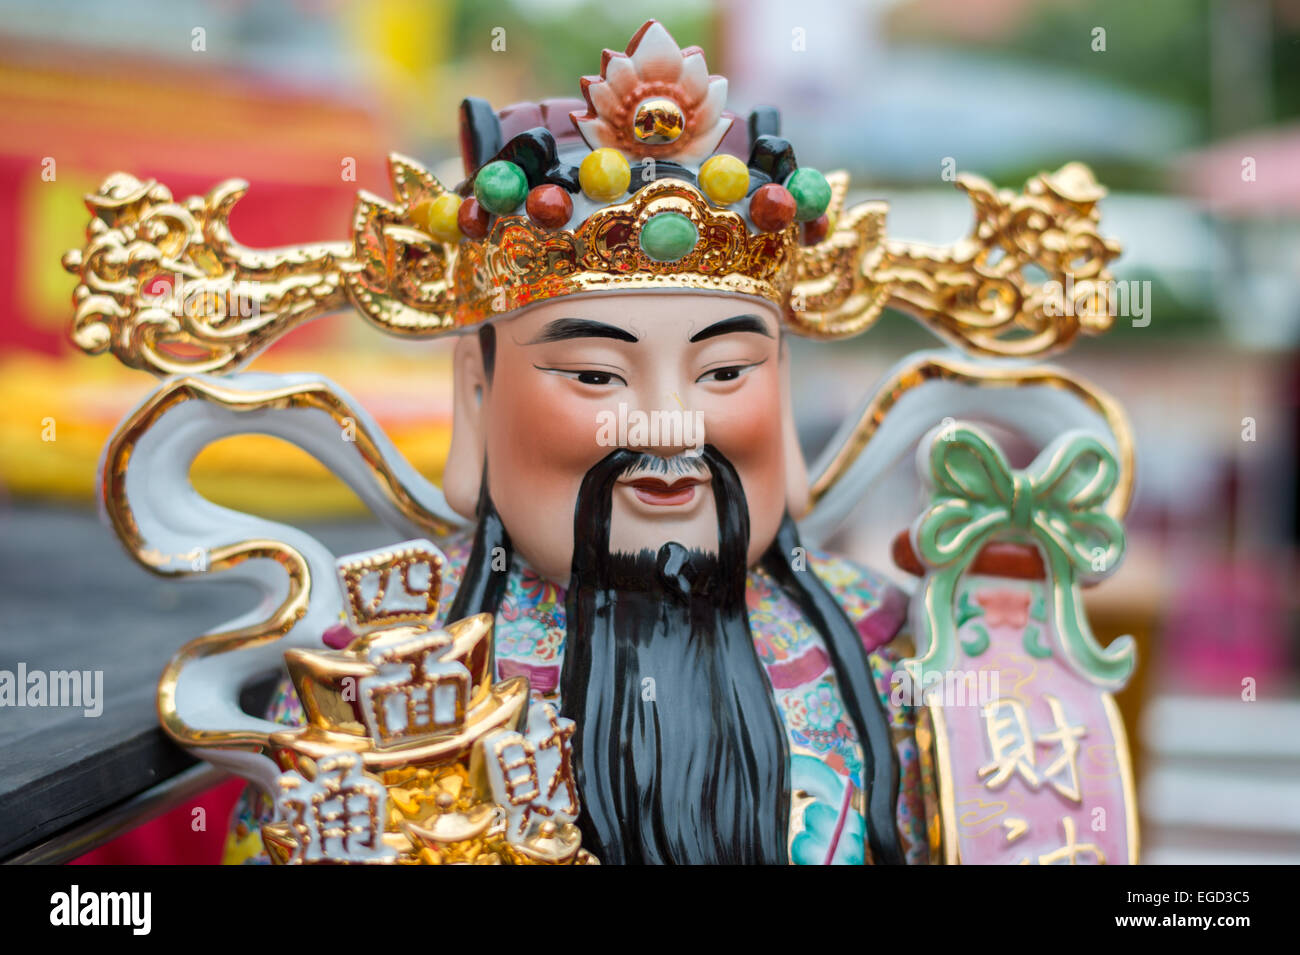 Chinese New Year decorations Stock Photo - Alamy